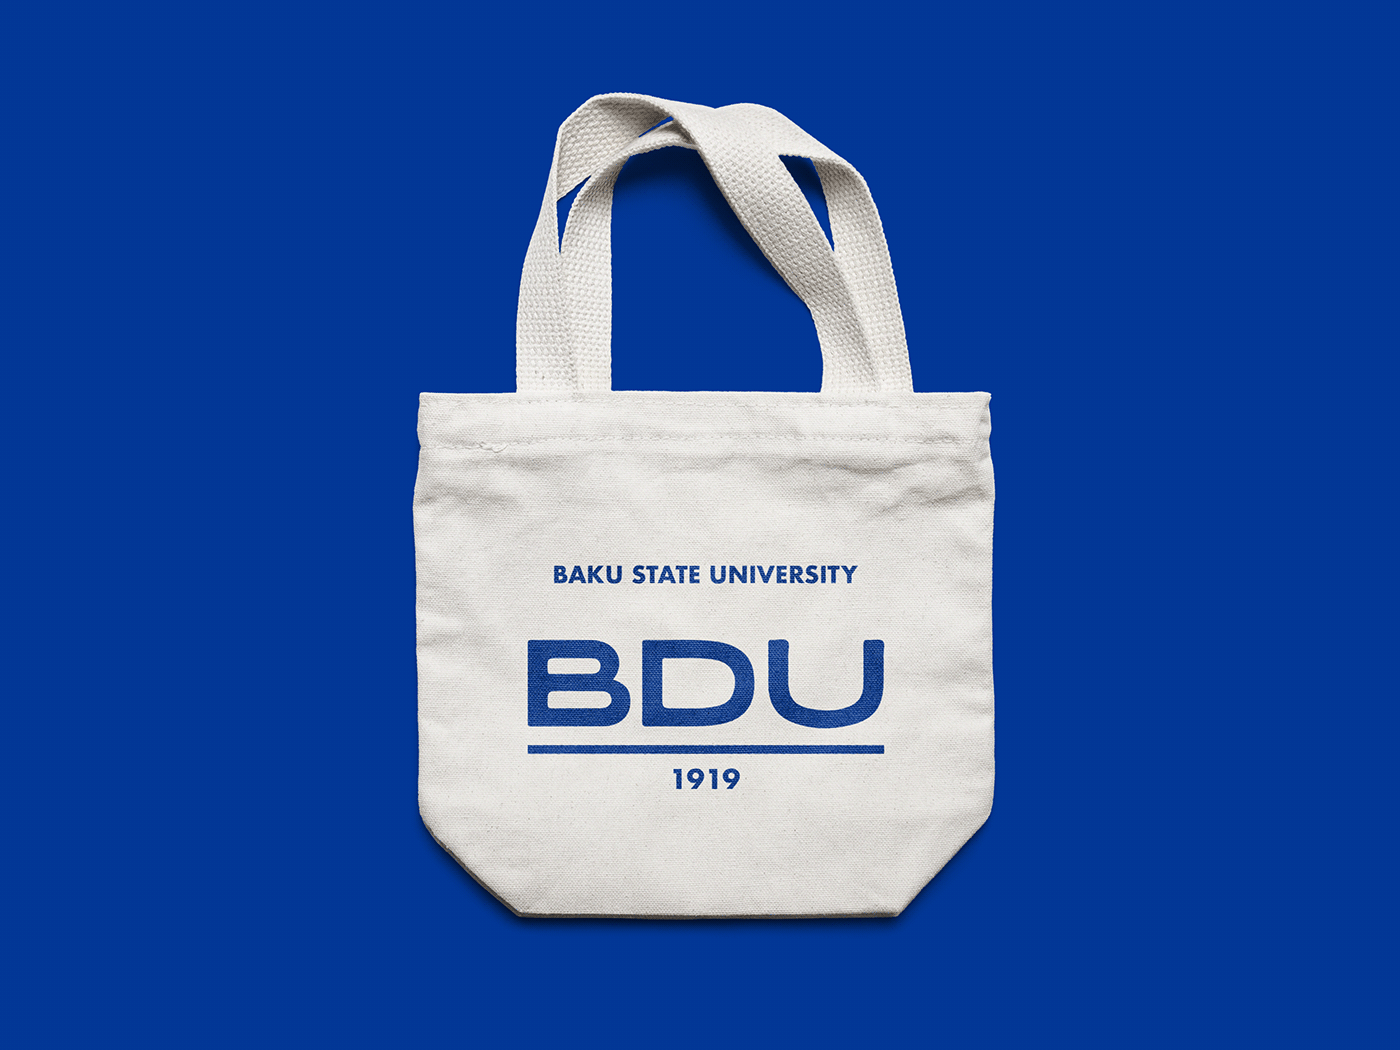 #bakustateuniversity #behance #Branding #concept #Design #education #university